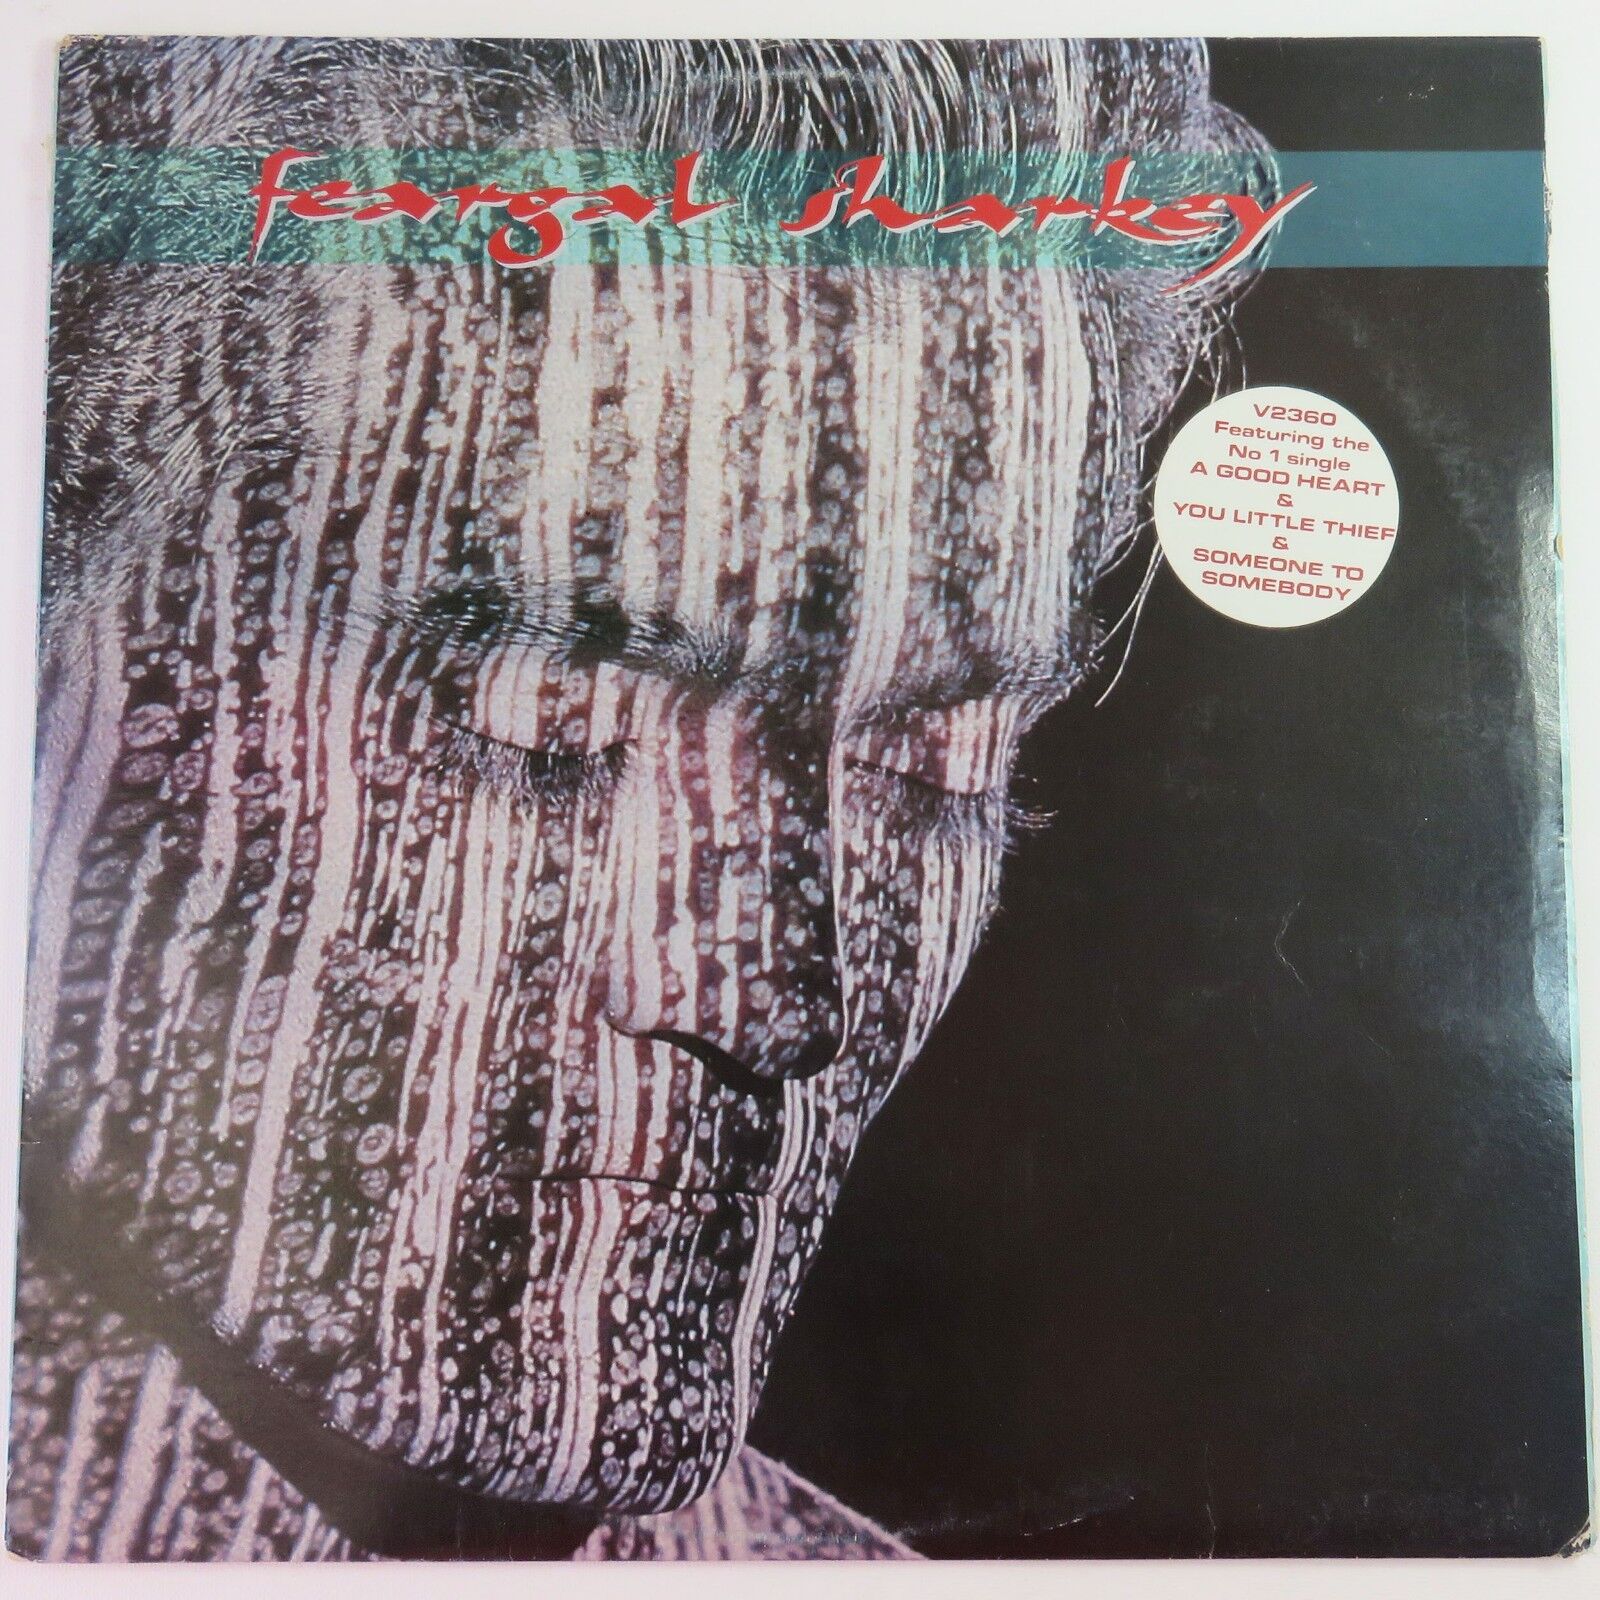 Self Titled by Feargal Sharkey, Virgin 1985 LP Vinyl Record